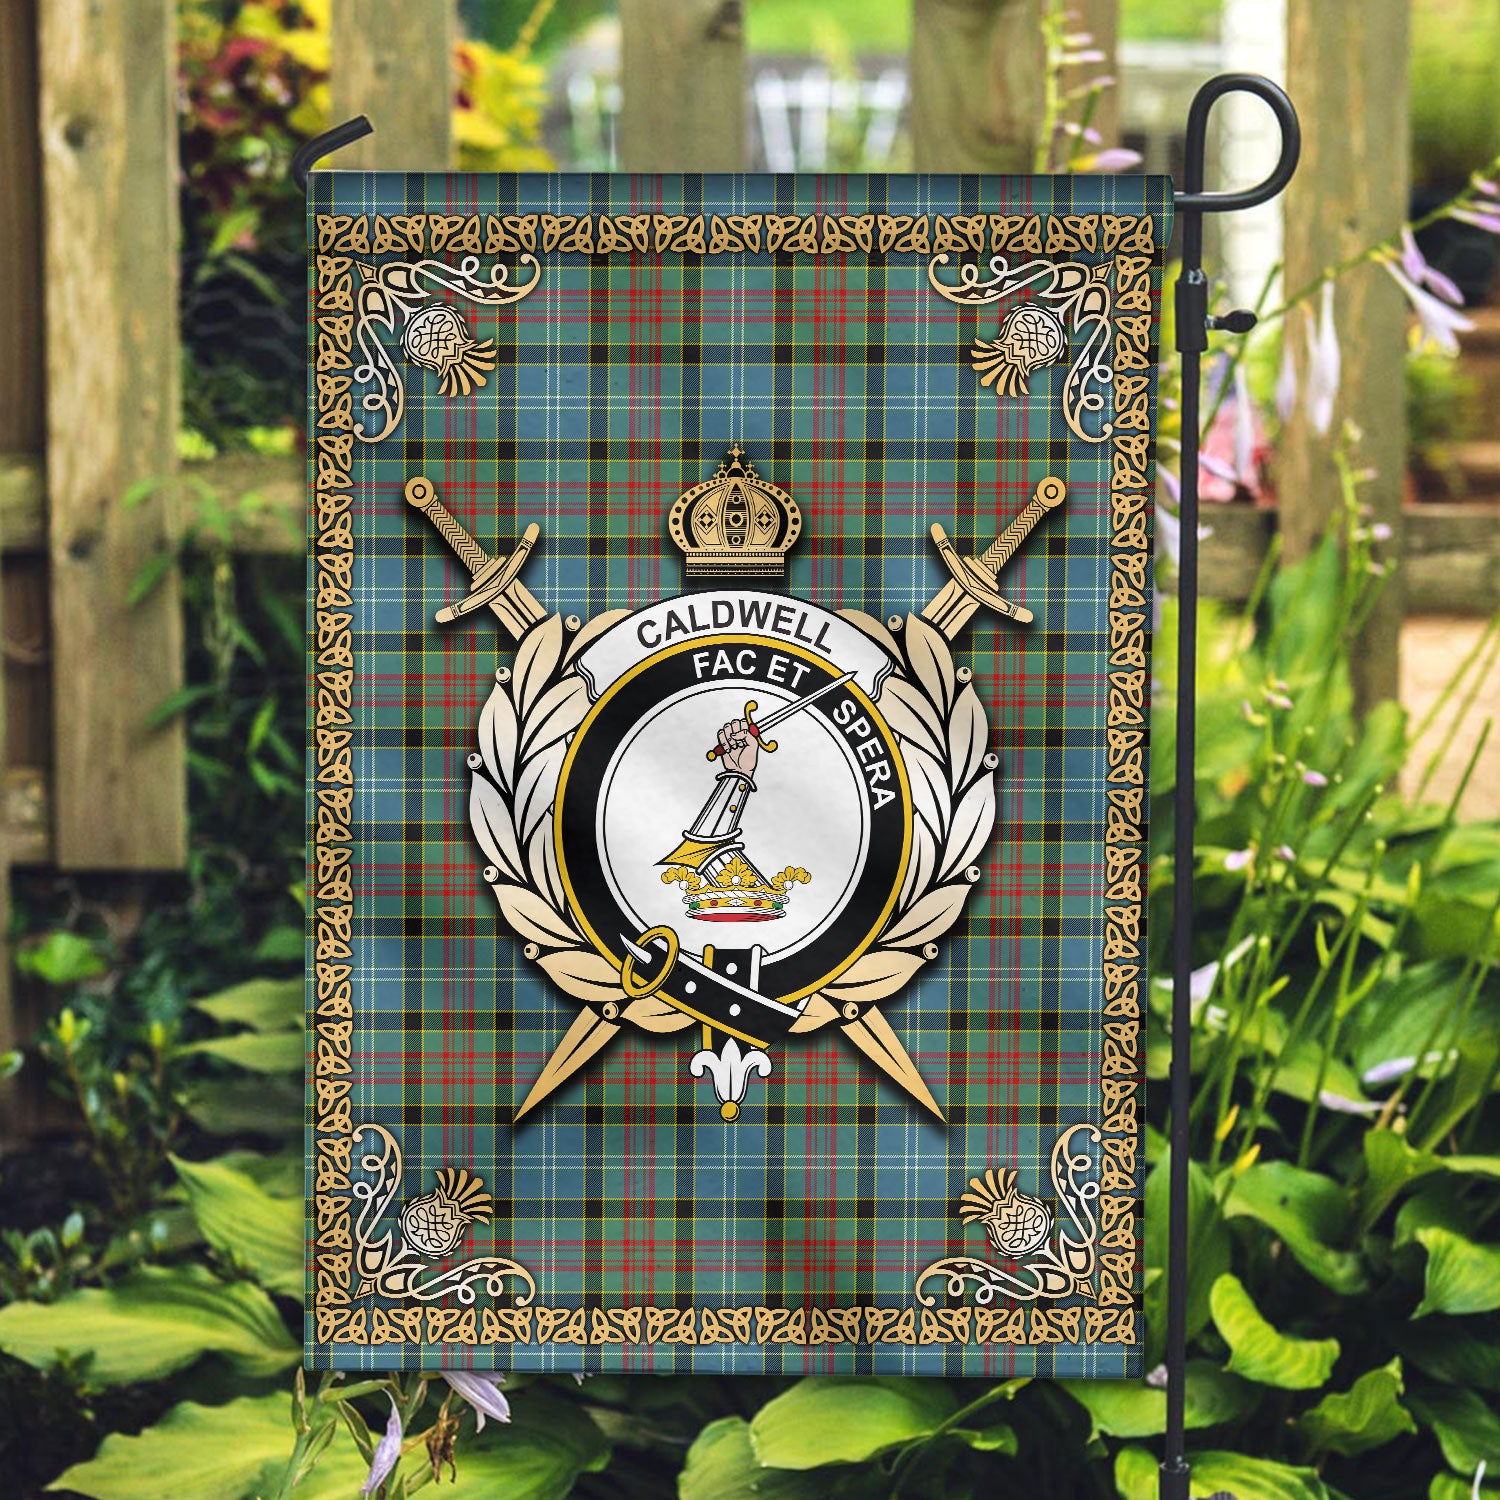 Caldwell Tartan Crest Garden Flag - Celtic Thistle Style